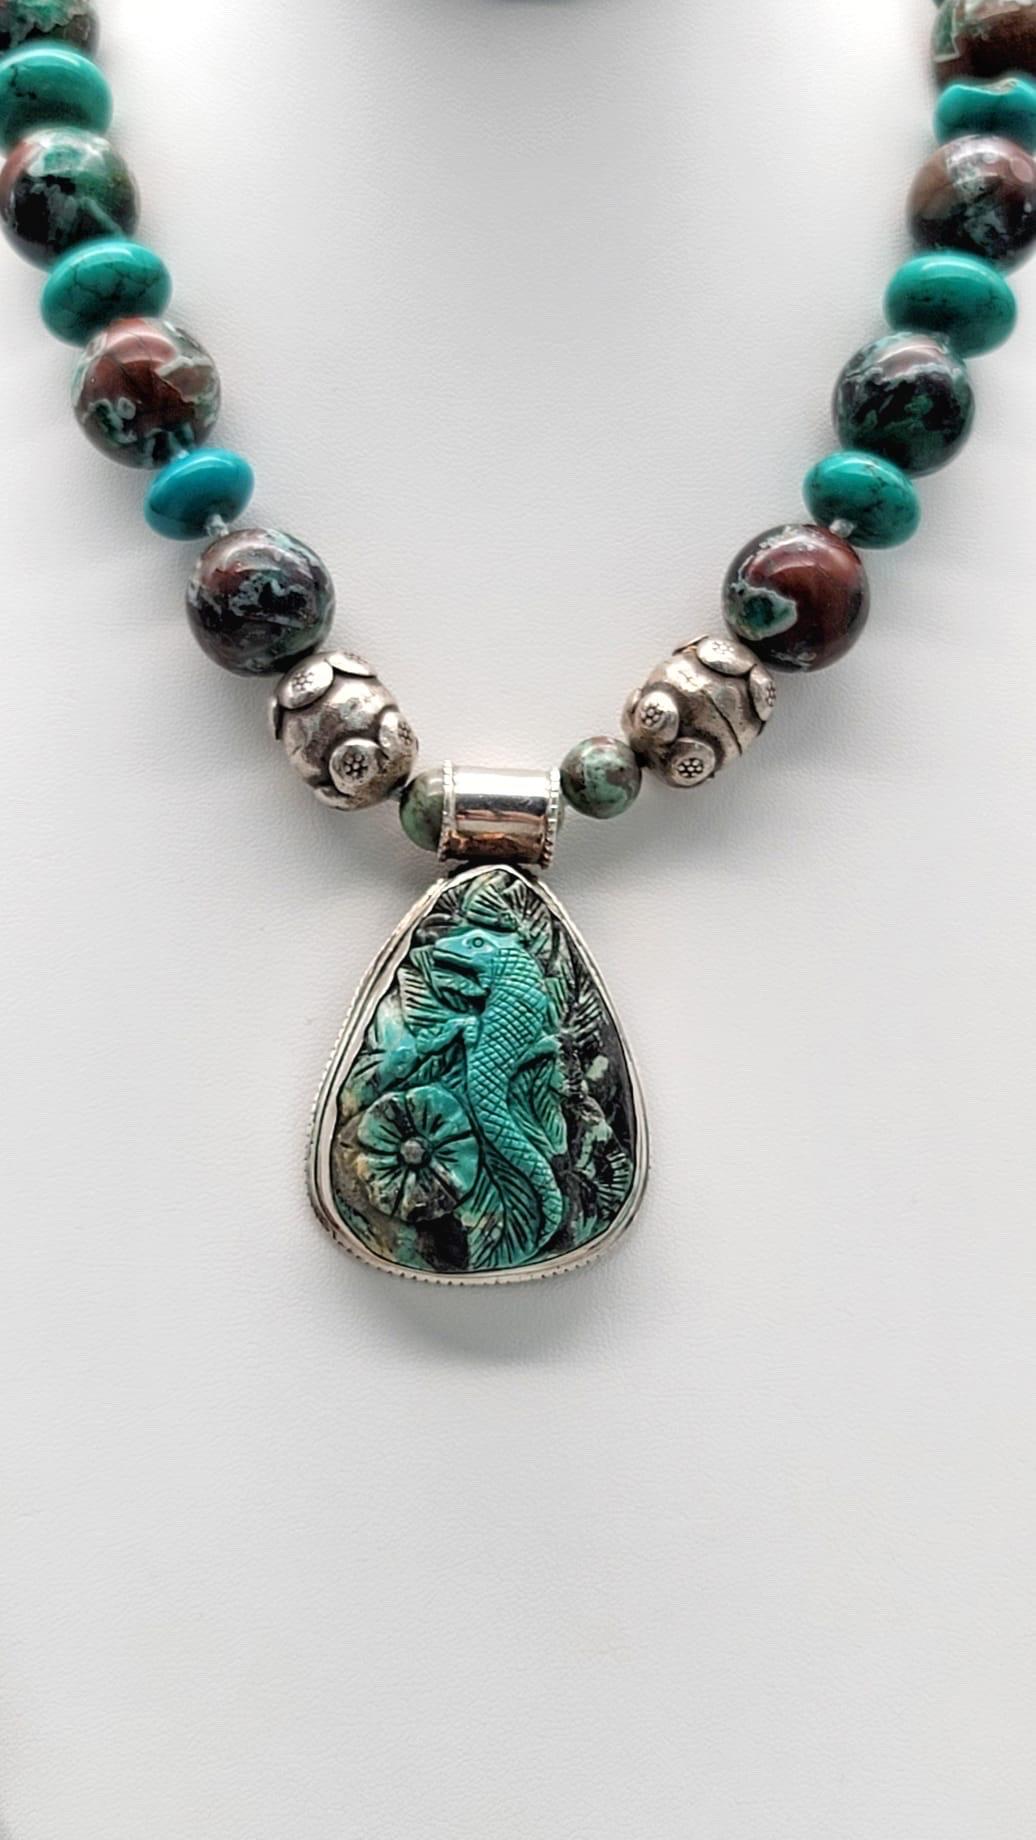 A.Jeschel  Turquoise Necklace Carved lizard pendant  3